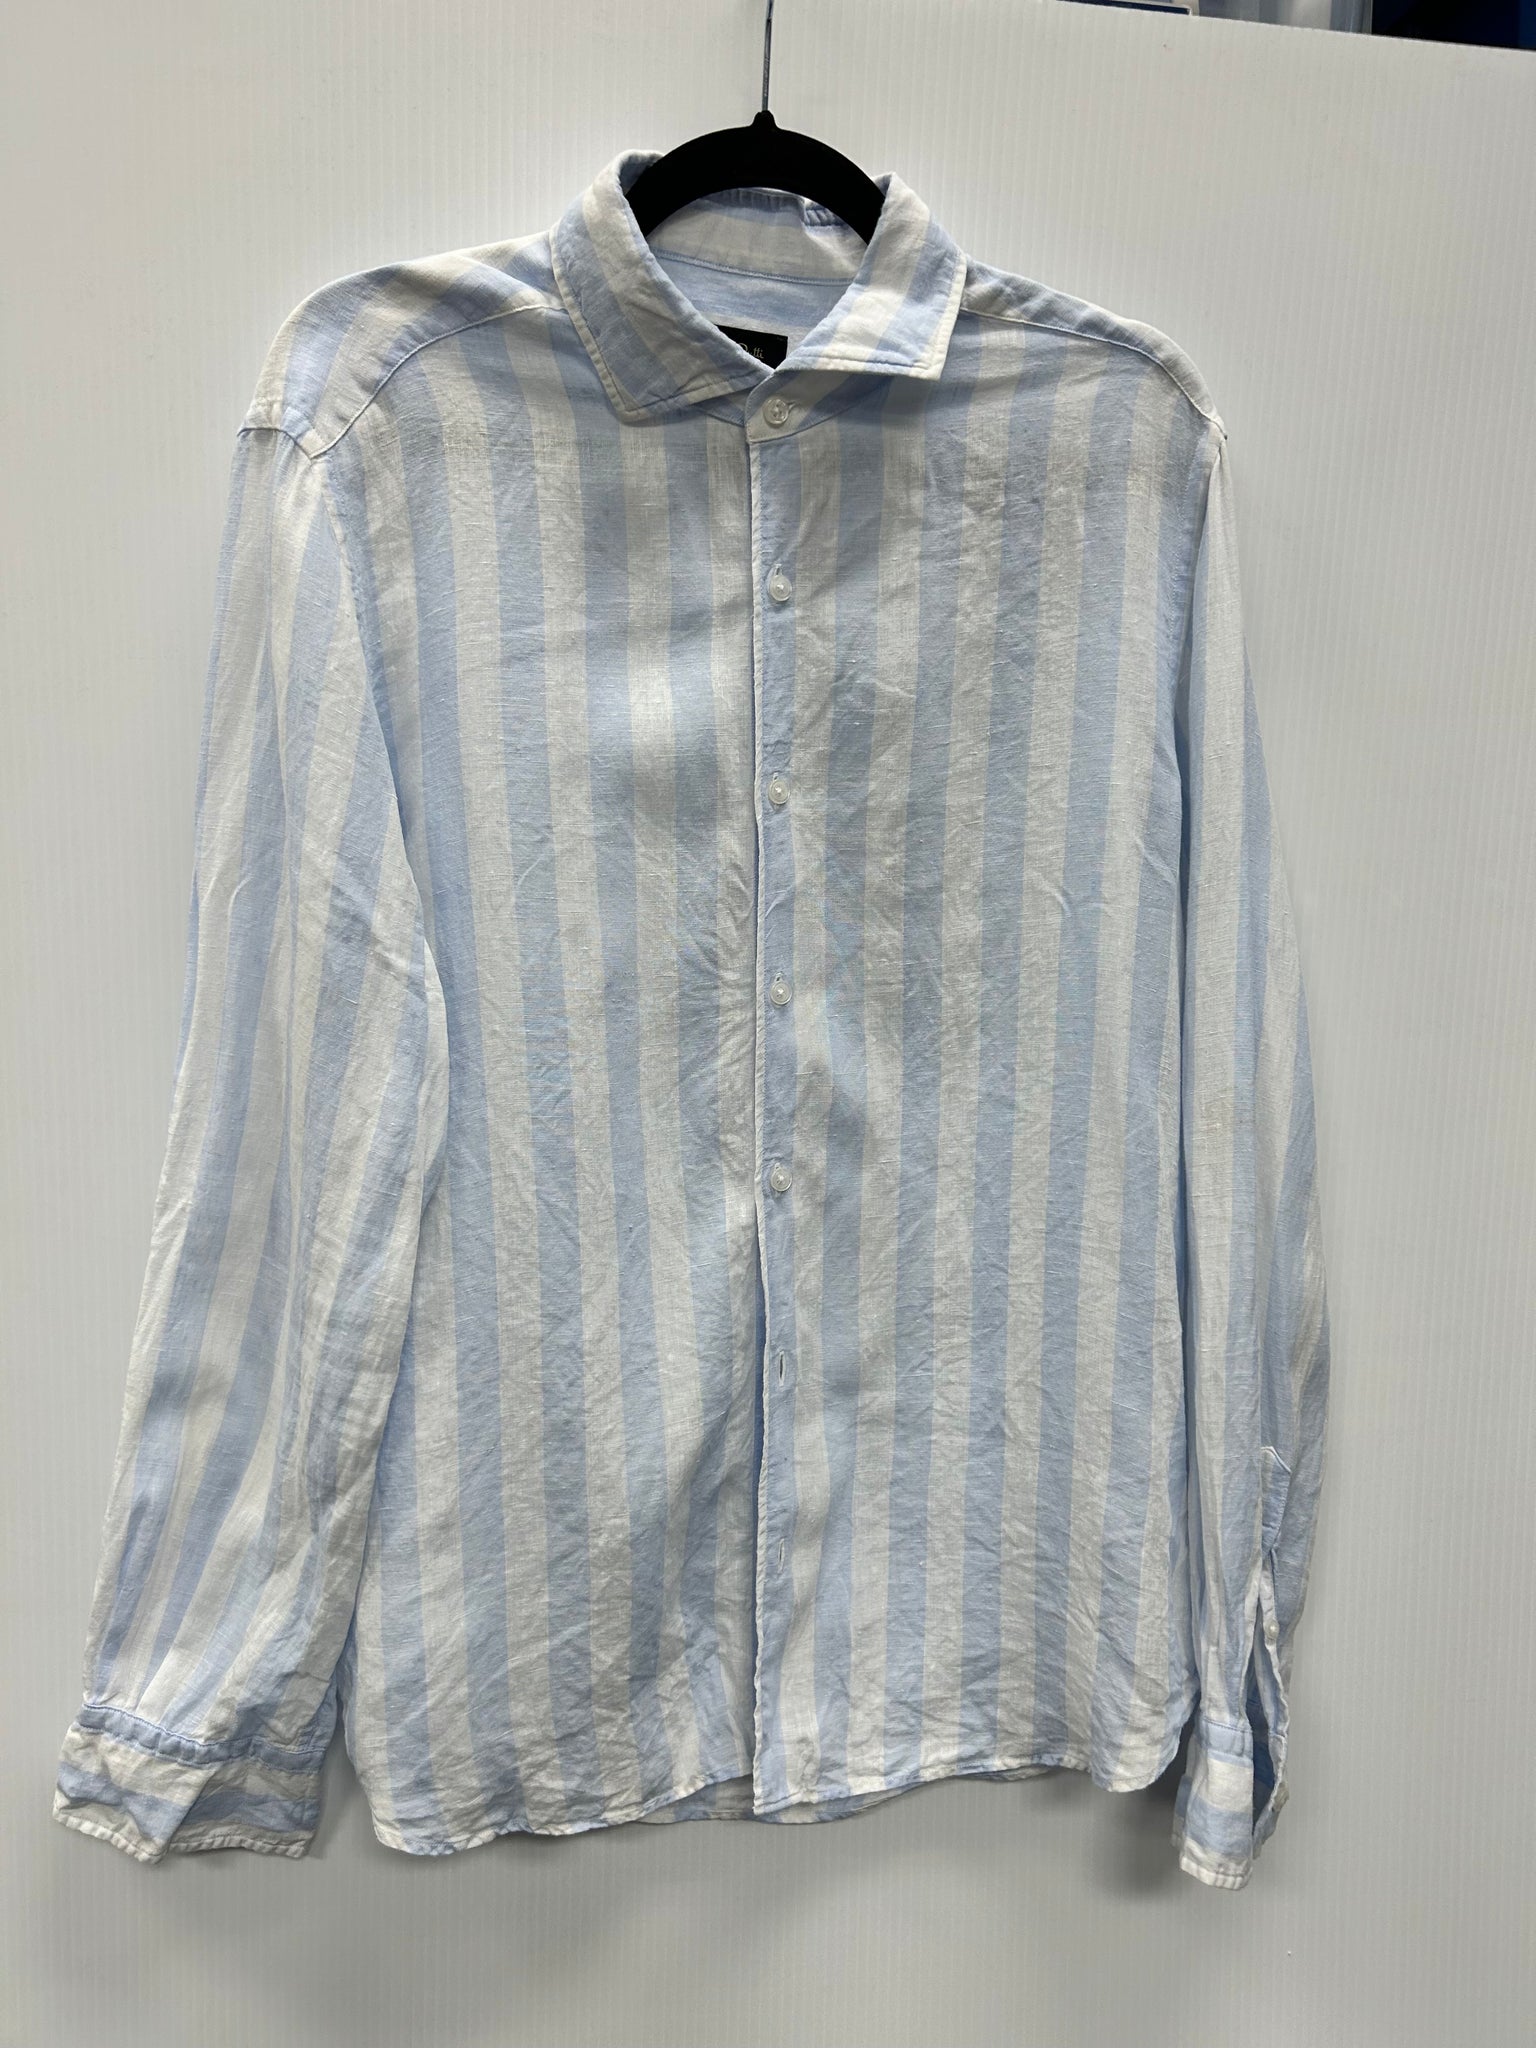 Size Large Massimo Dutti Shirt Item No. 21104